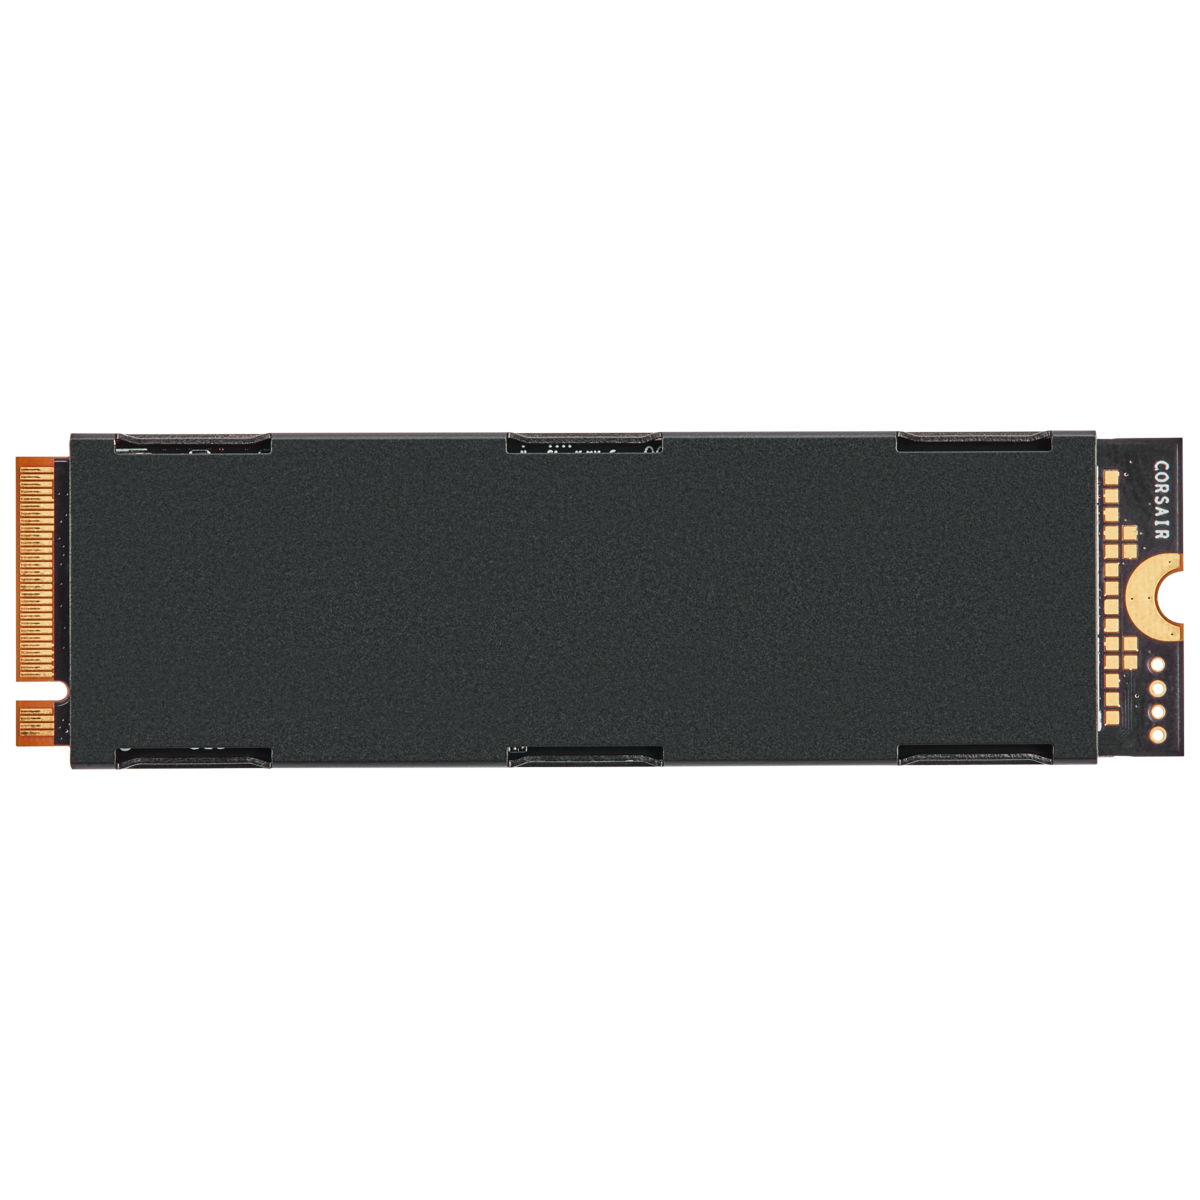 CORSAIR FORCE SERIES GEN.4 PCIE MP600 2TB NVME M.2 SSD